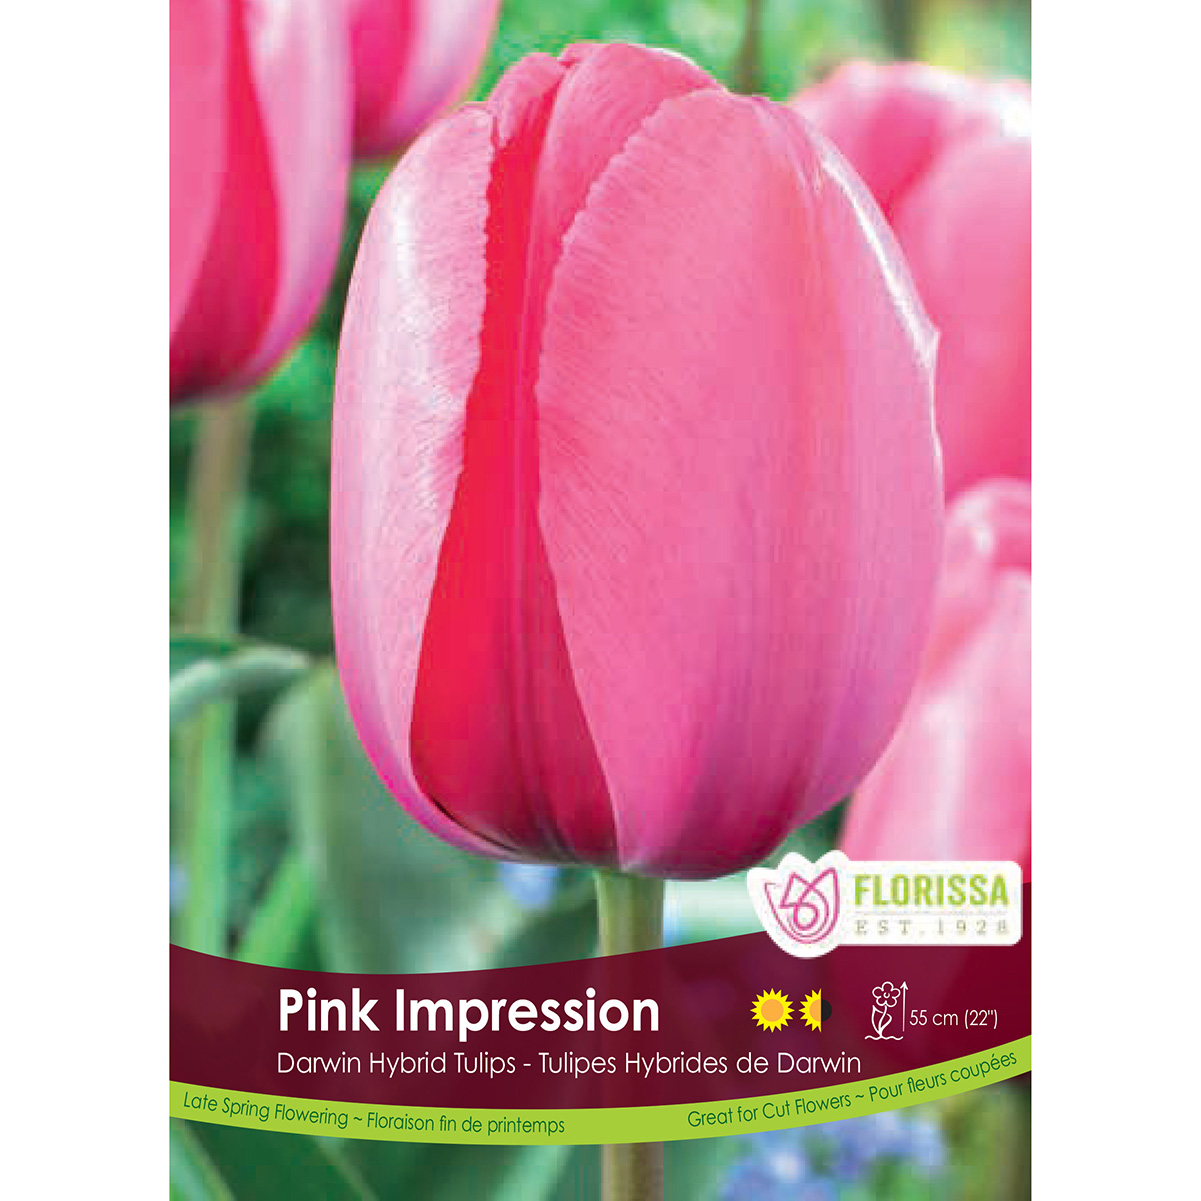 Тюльпан pink impression фото и описание